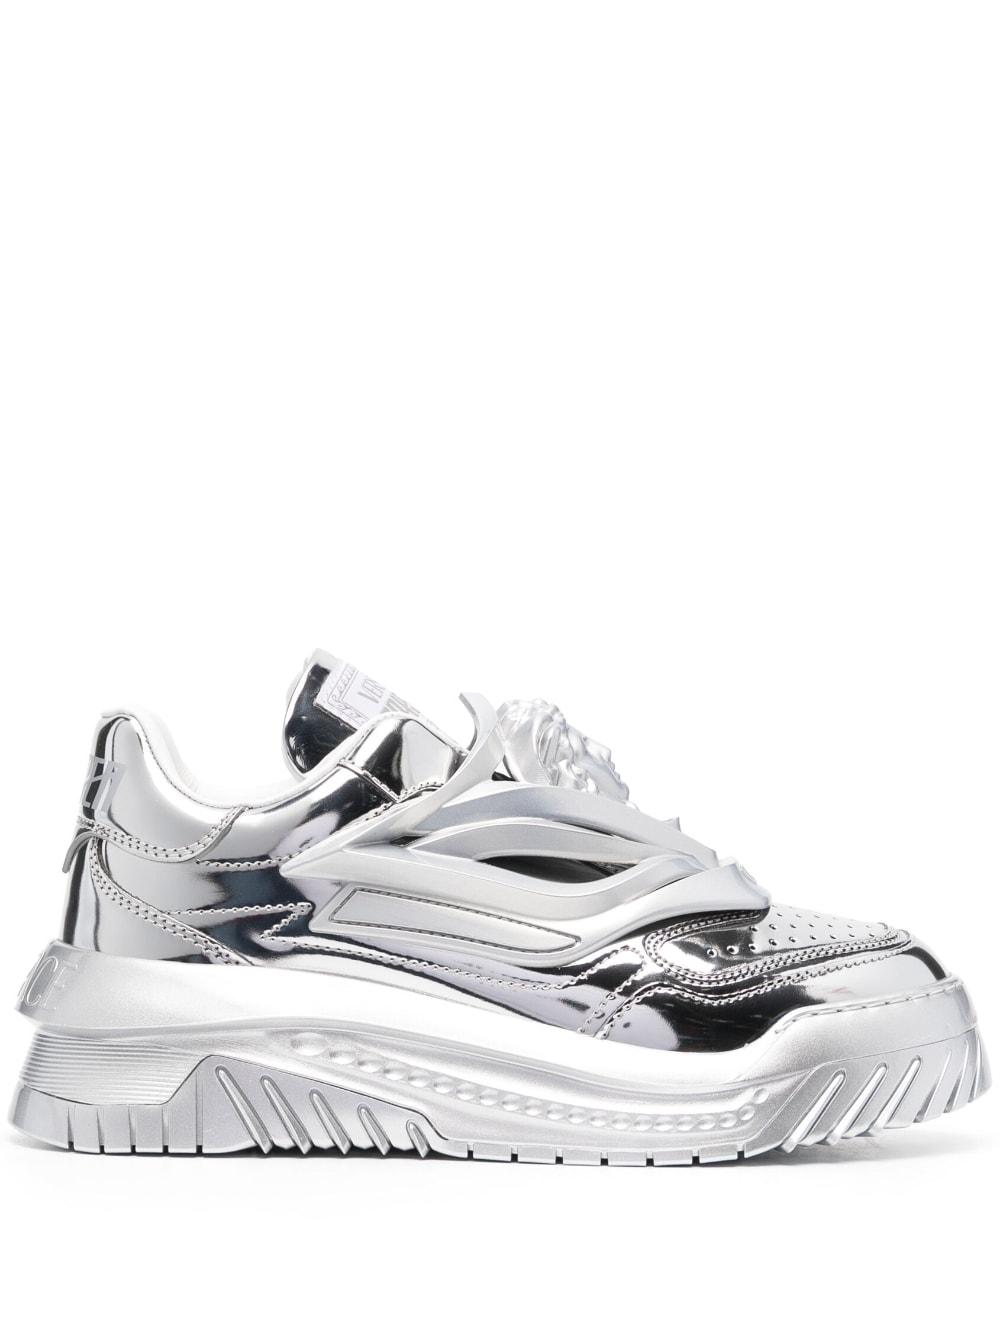 Versace Odissea Metallic Sneakers in White | Lyst